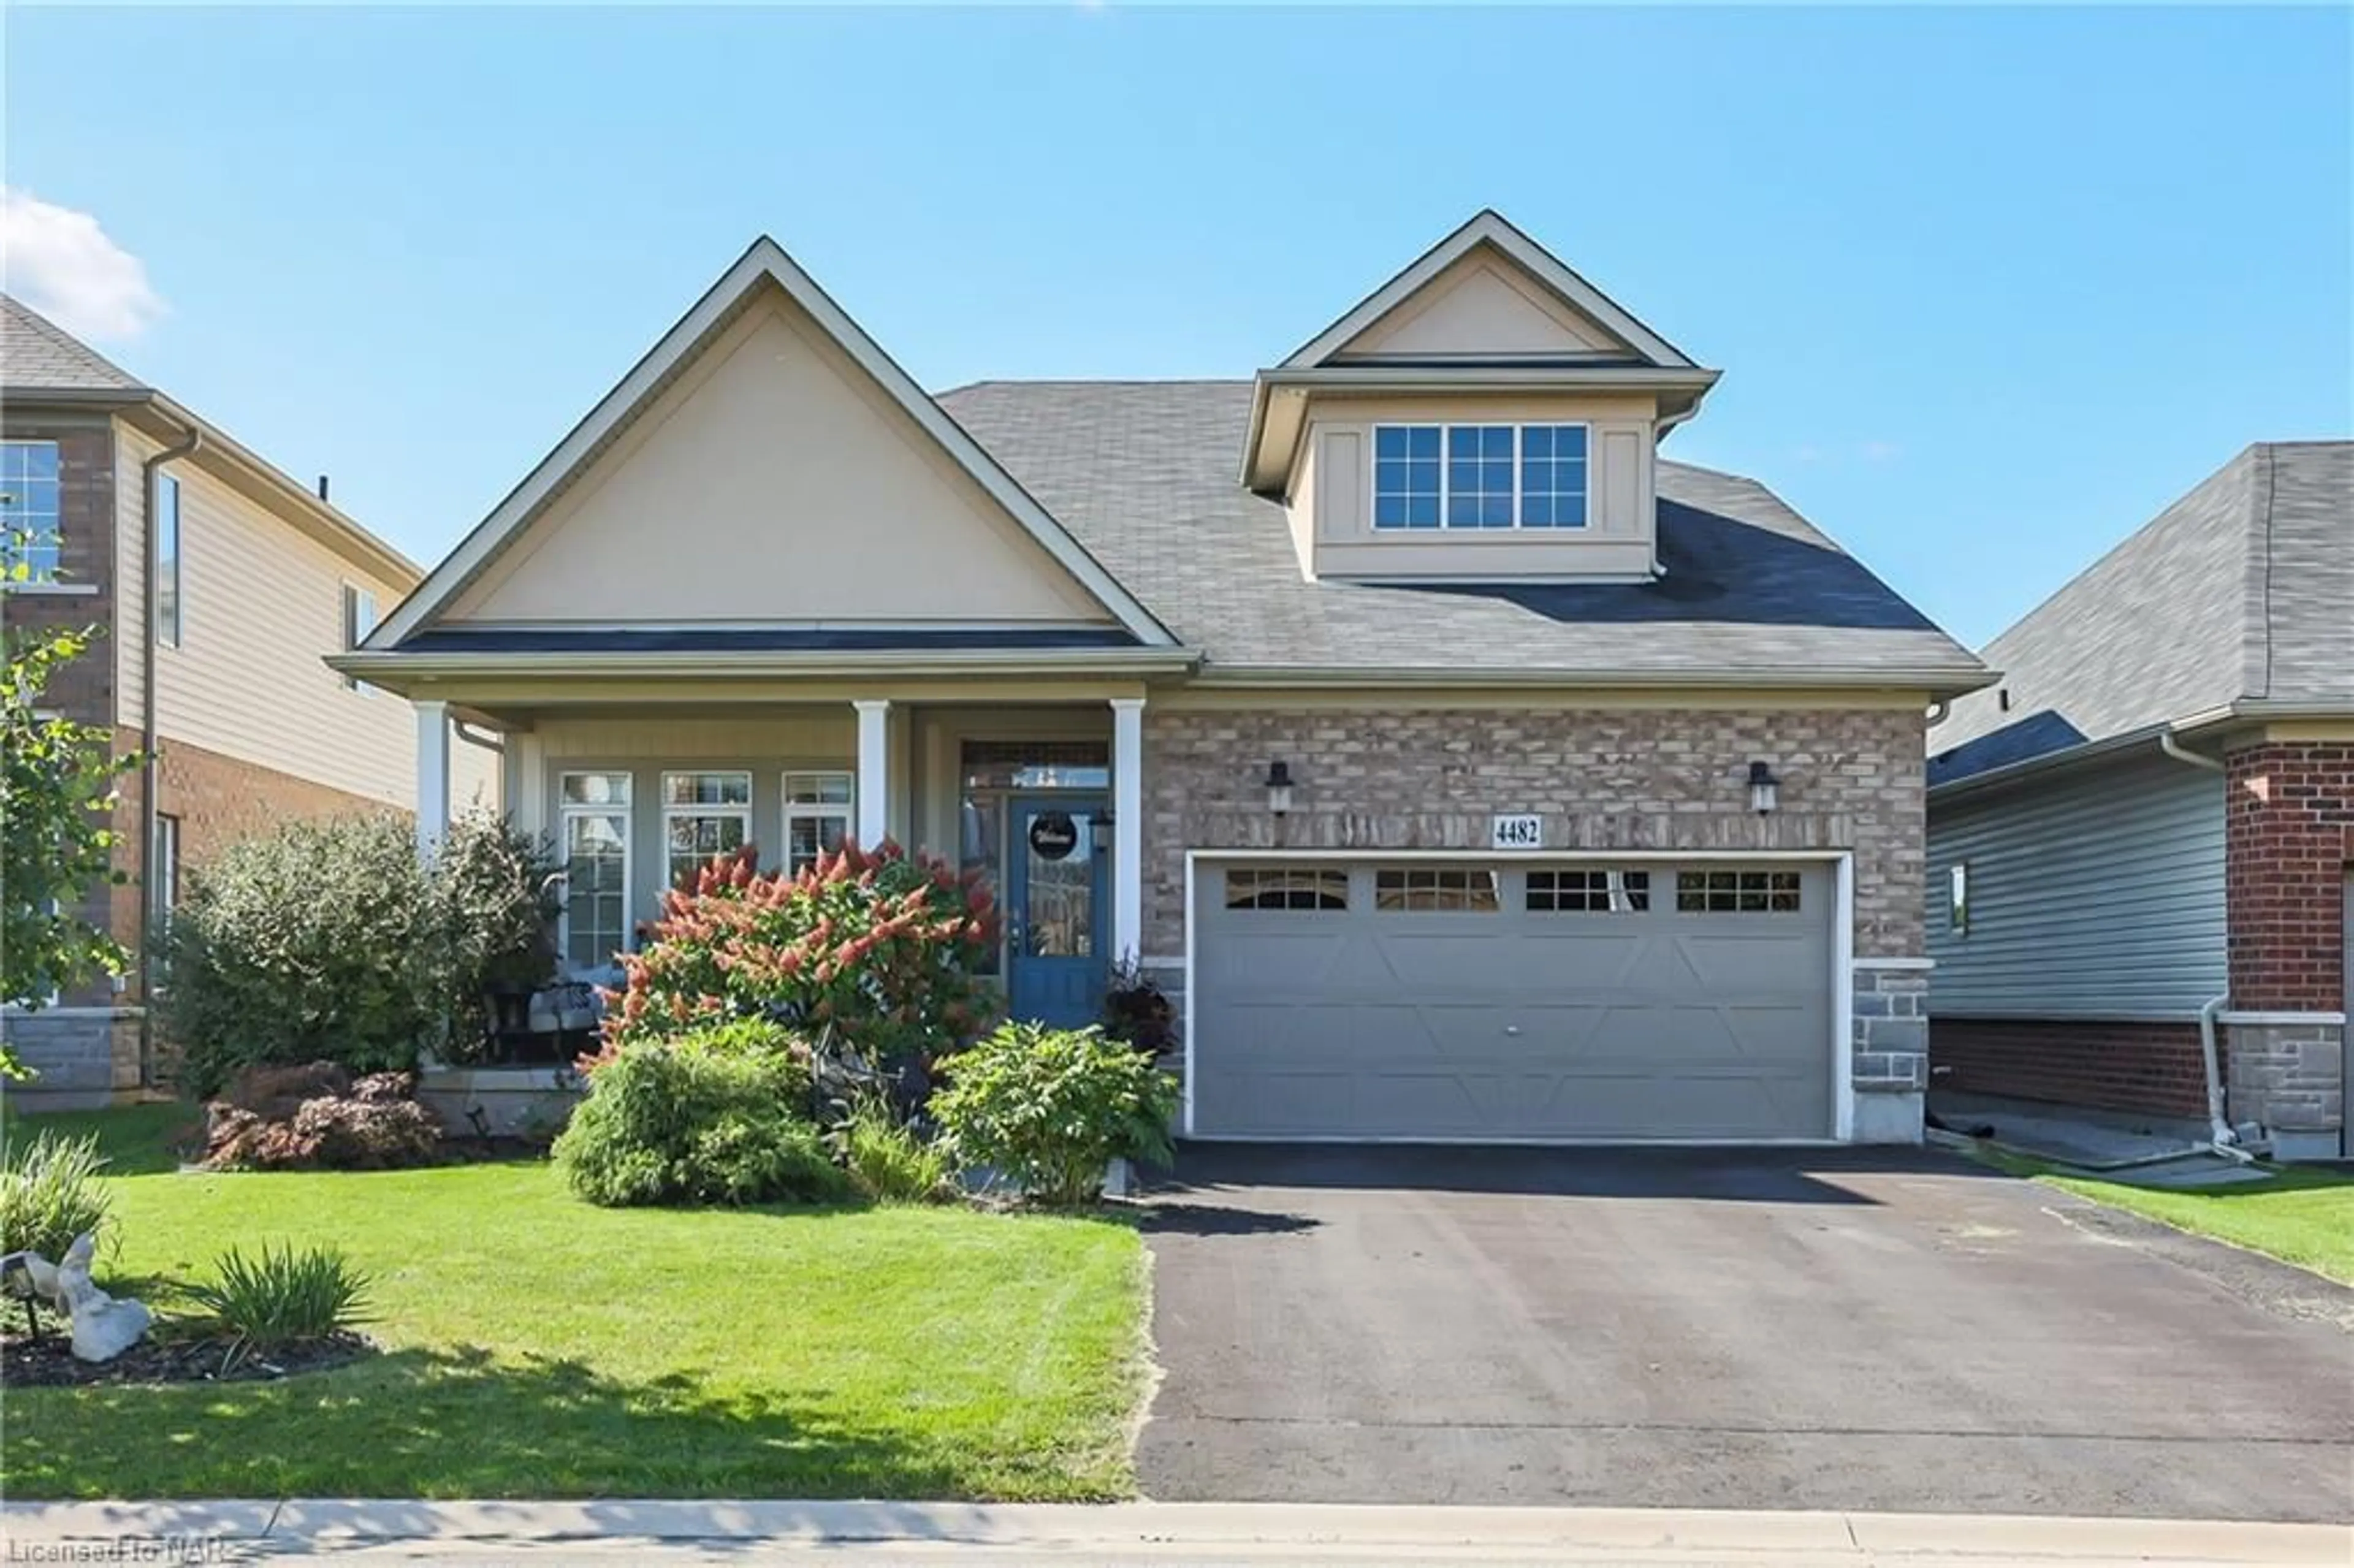 Frontside or backside of a home for 4482 Cinnamon Grove Grove, Niagara Falls Ontario L2G 0G7